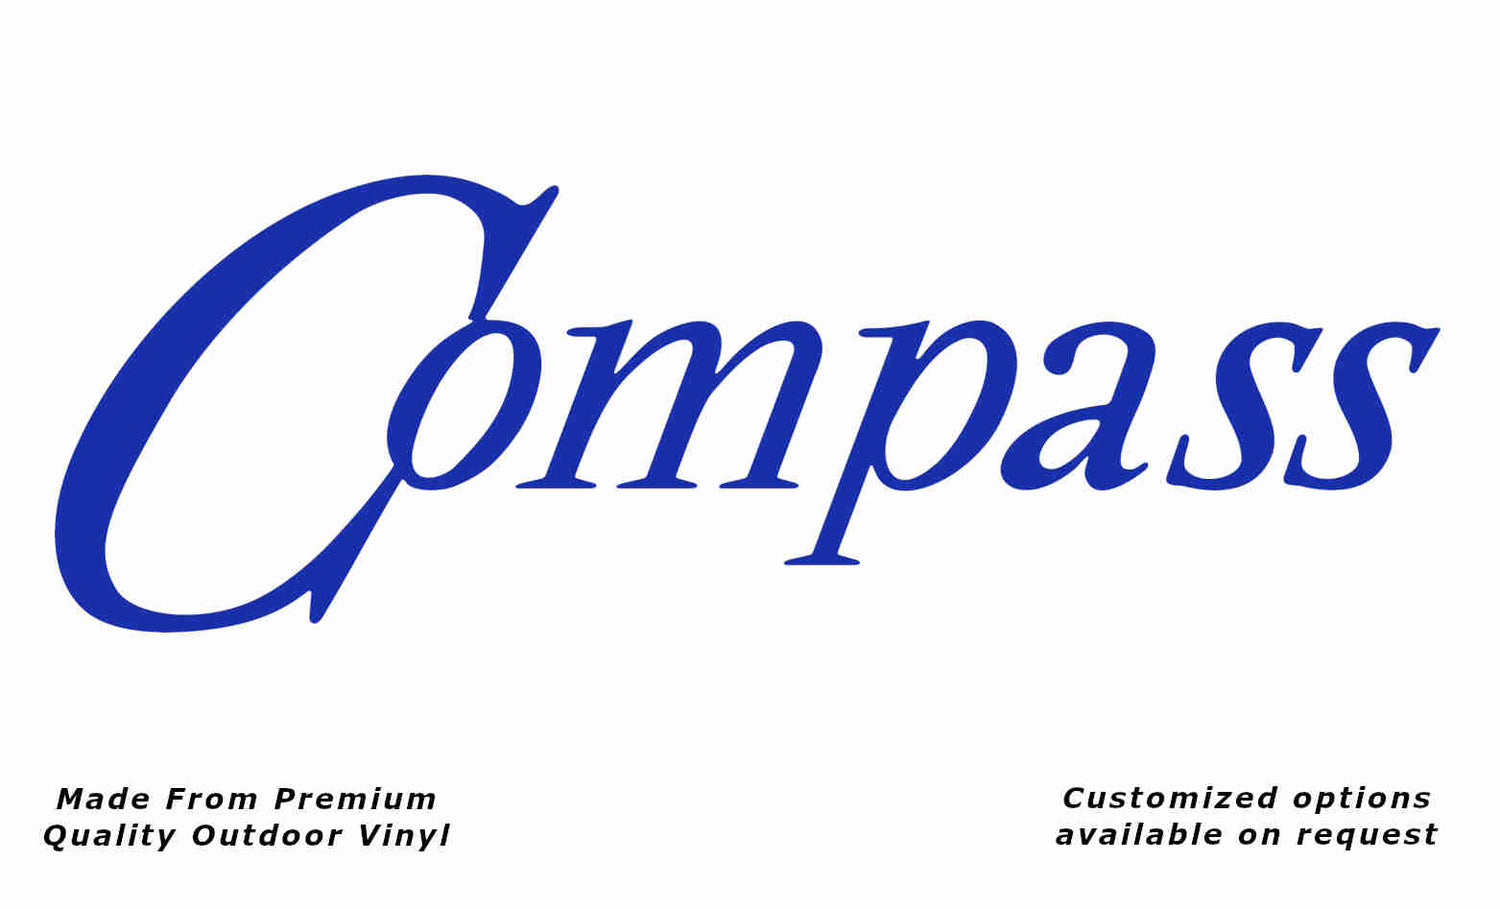 Compass caravan replacement vinyl decal sticker in brilliant blue.